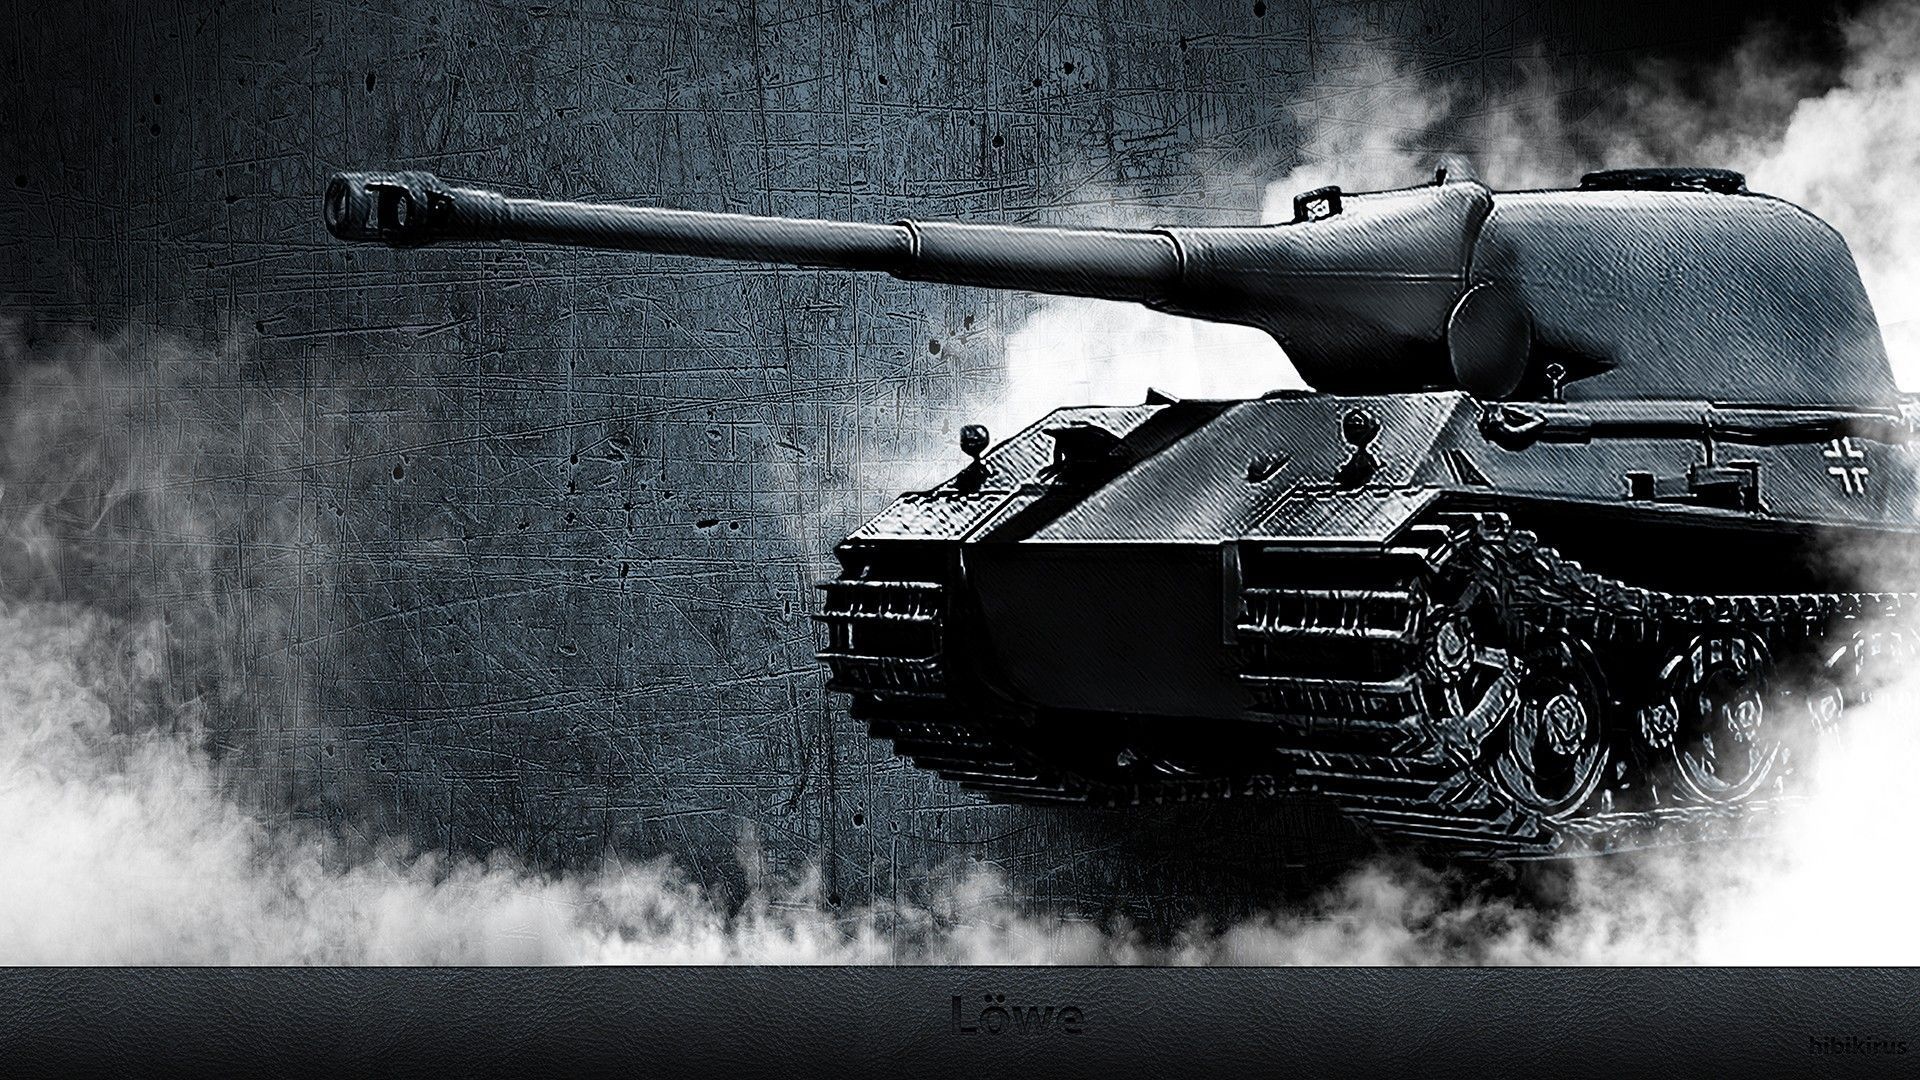 Top World Of Tanks Wallpaper Images for Pinterest